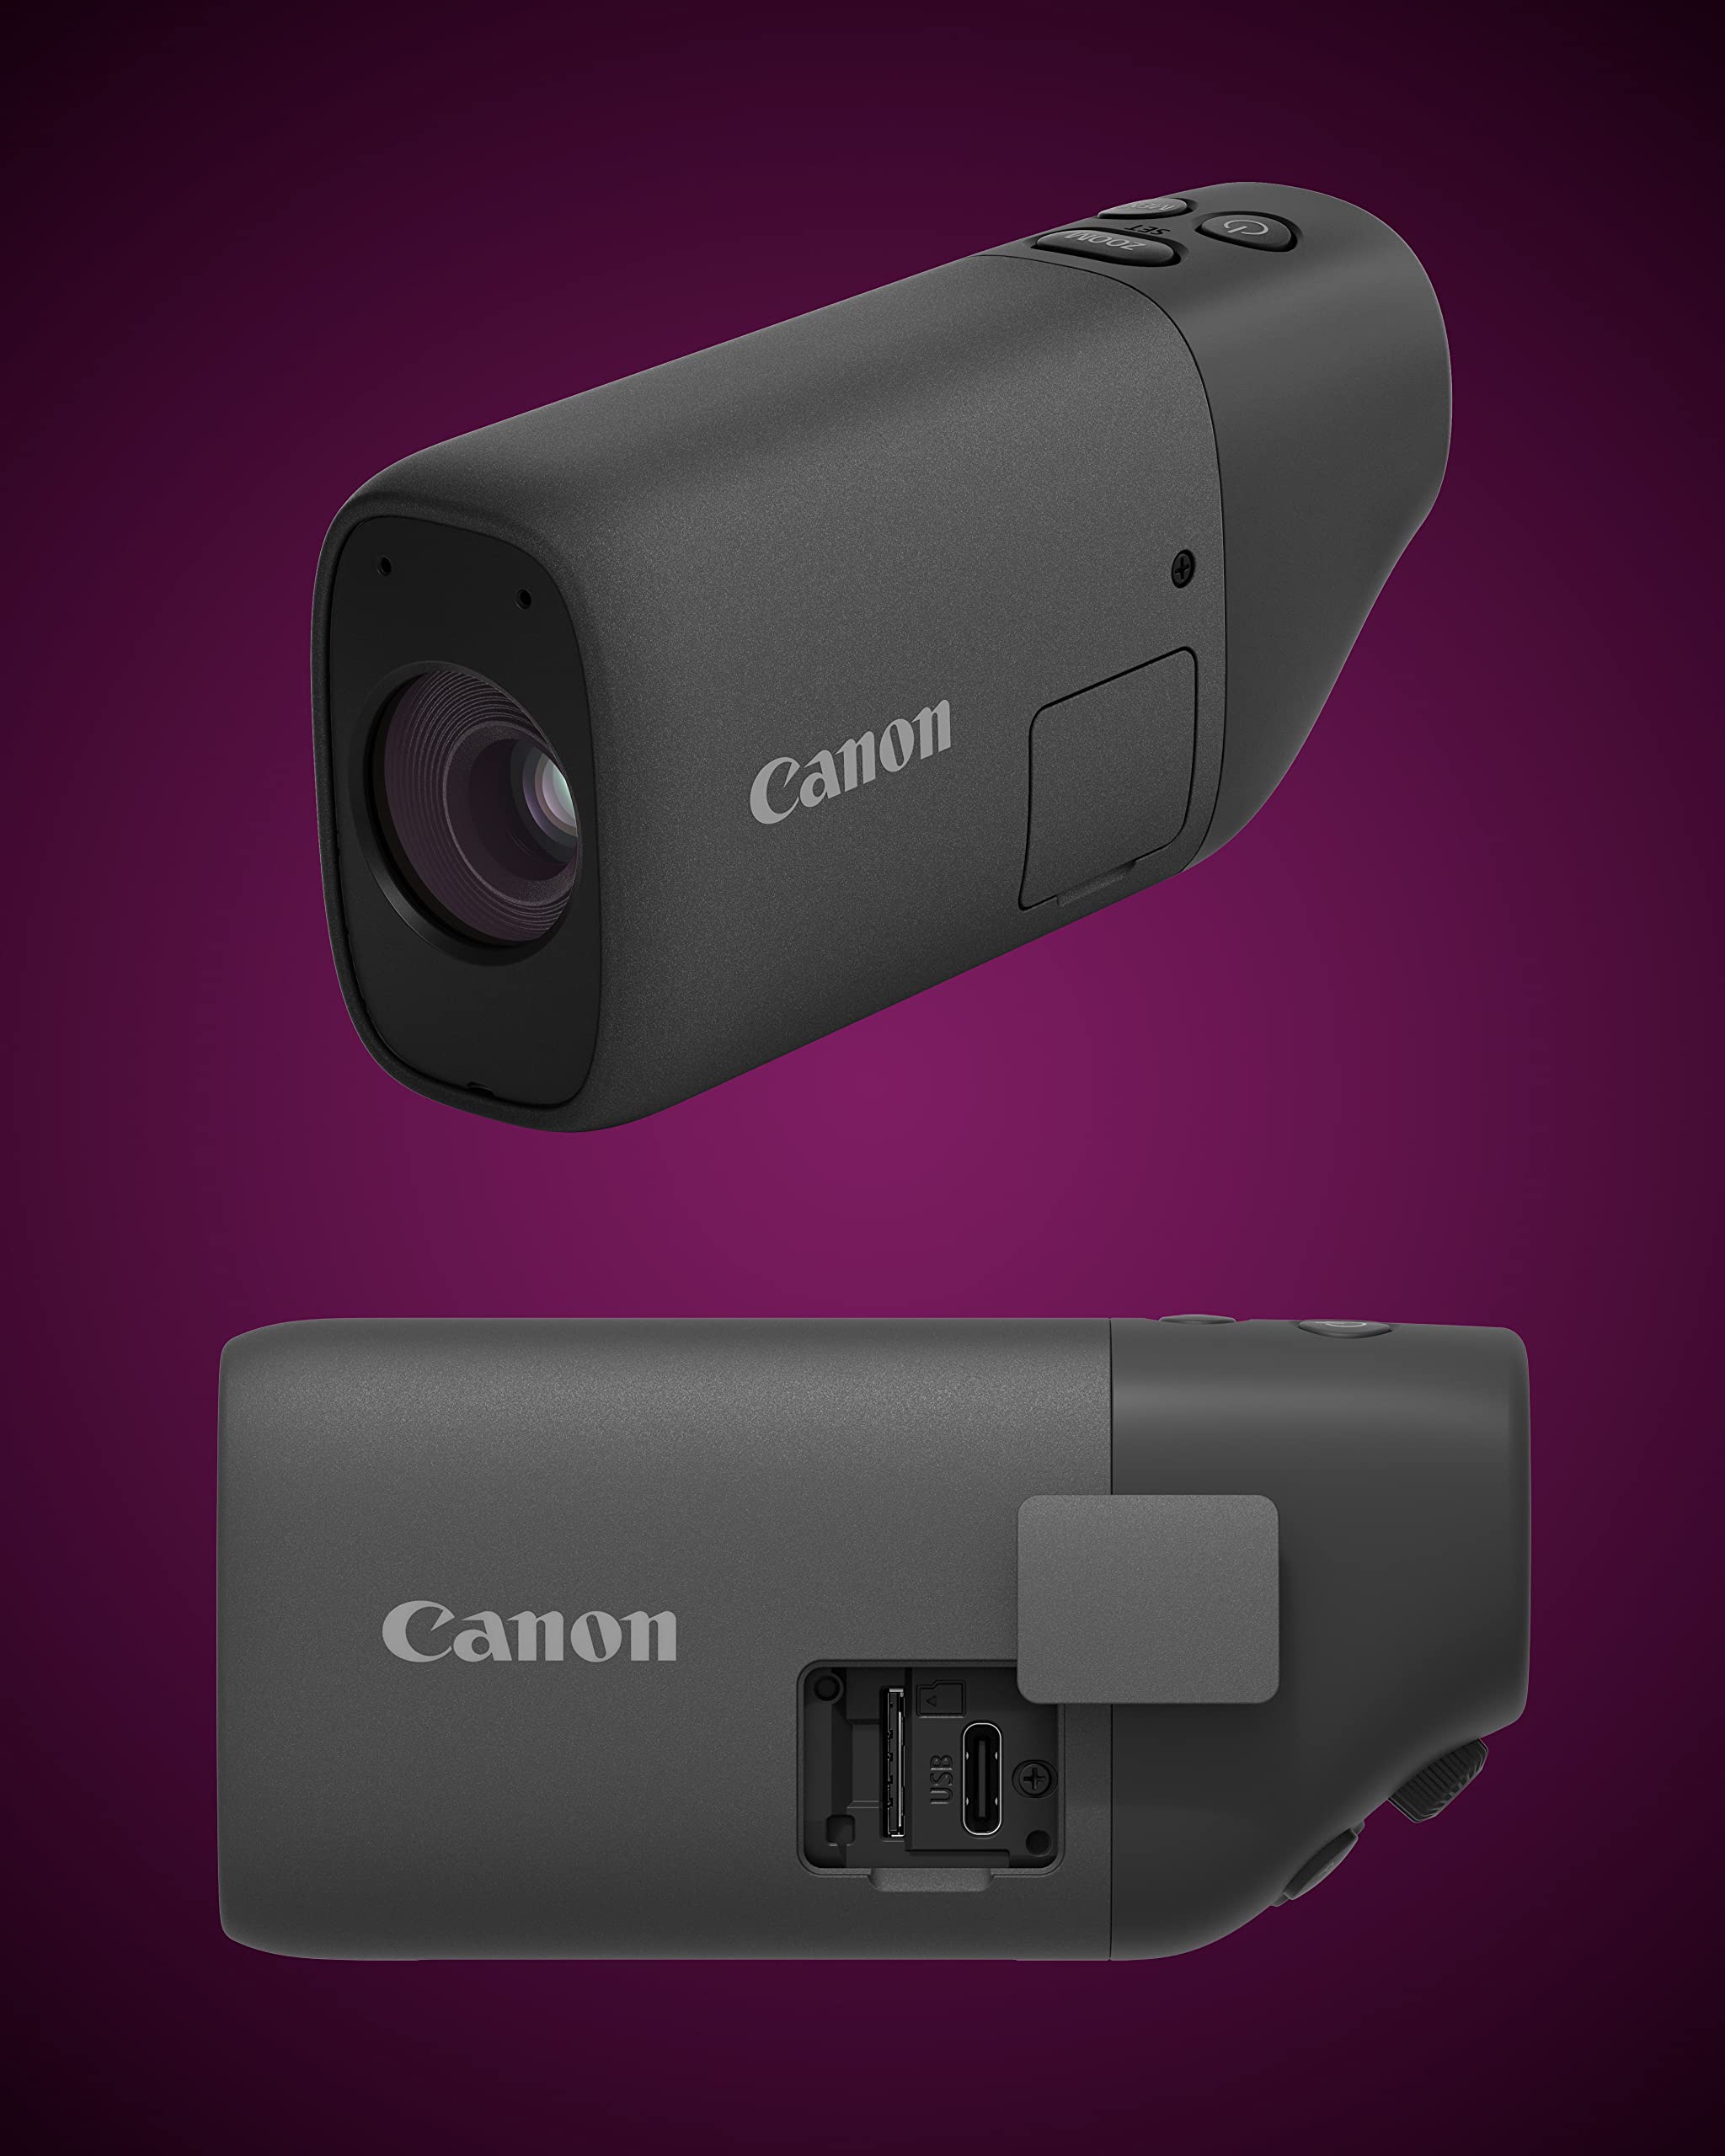 Canon Zoom Digital Monocular Kit with USB-C Charger, microSD Card, PowerShot Zoom, 400mm Optical, 800mm Digital Zoom, Bird Watching, Wildlife, Sports Watching, Traveling, Hiking